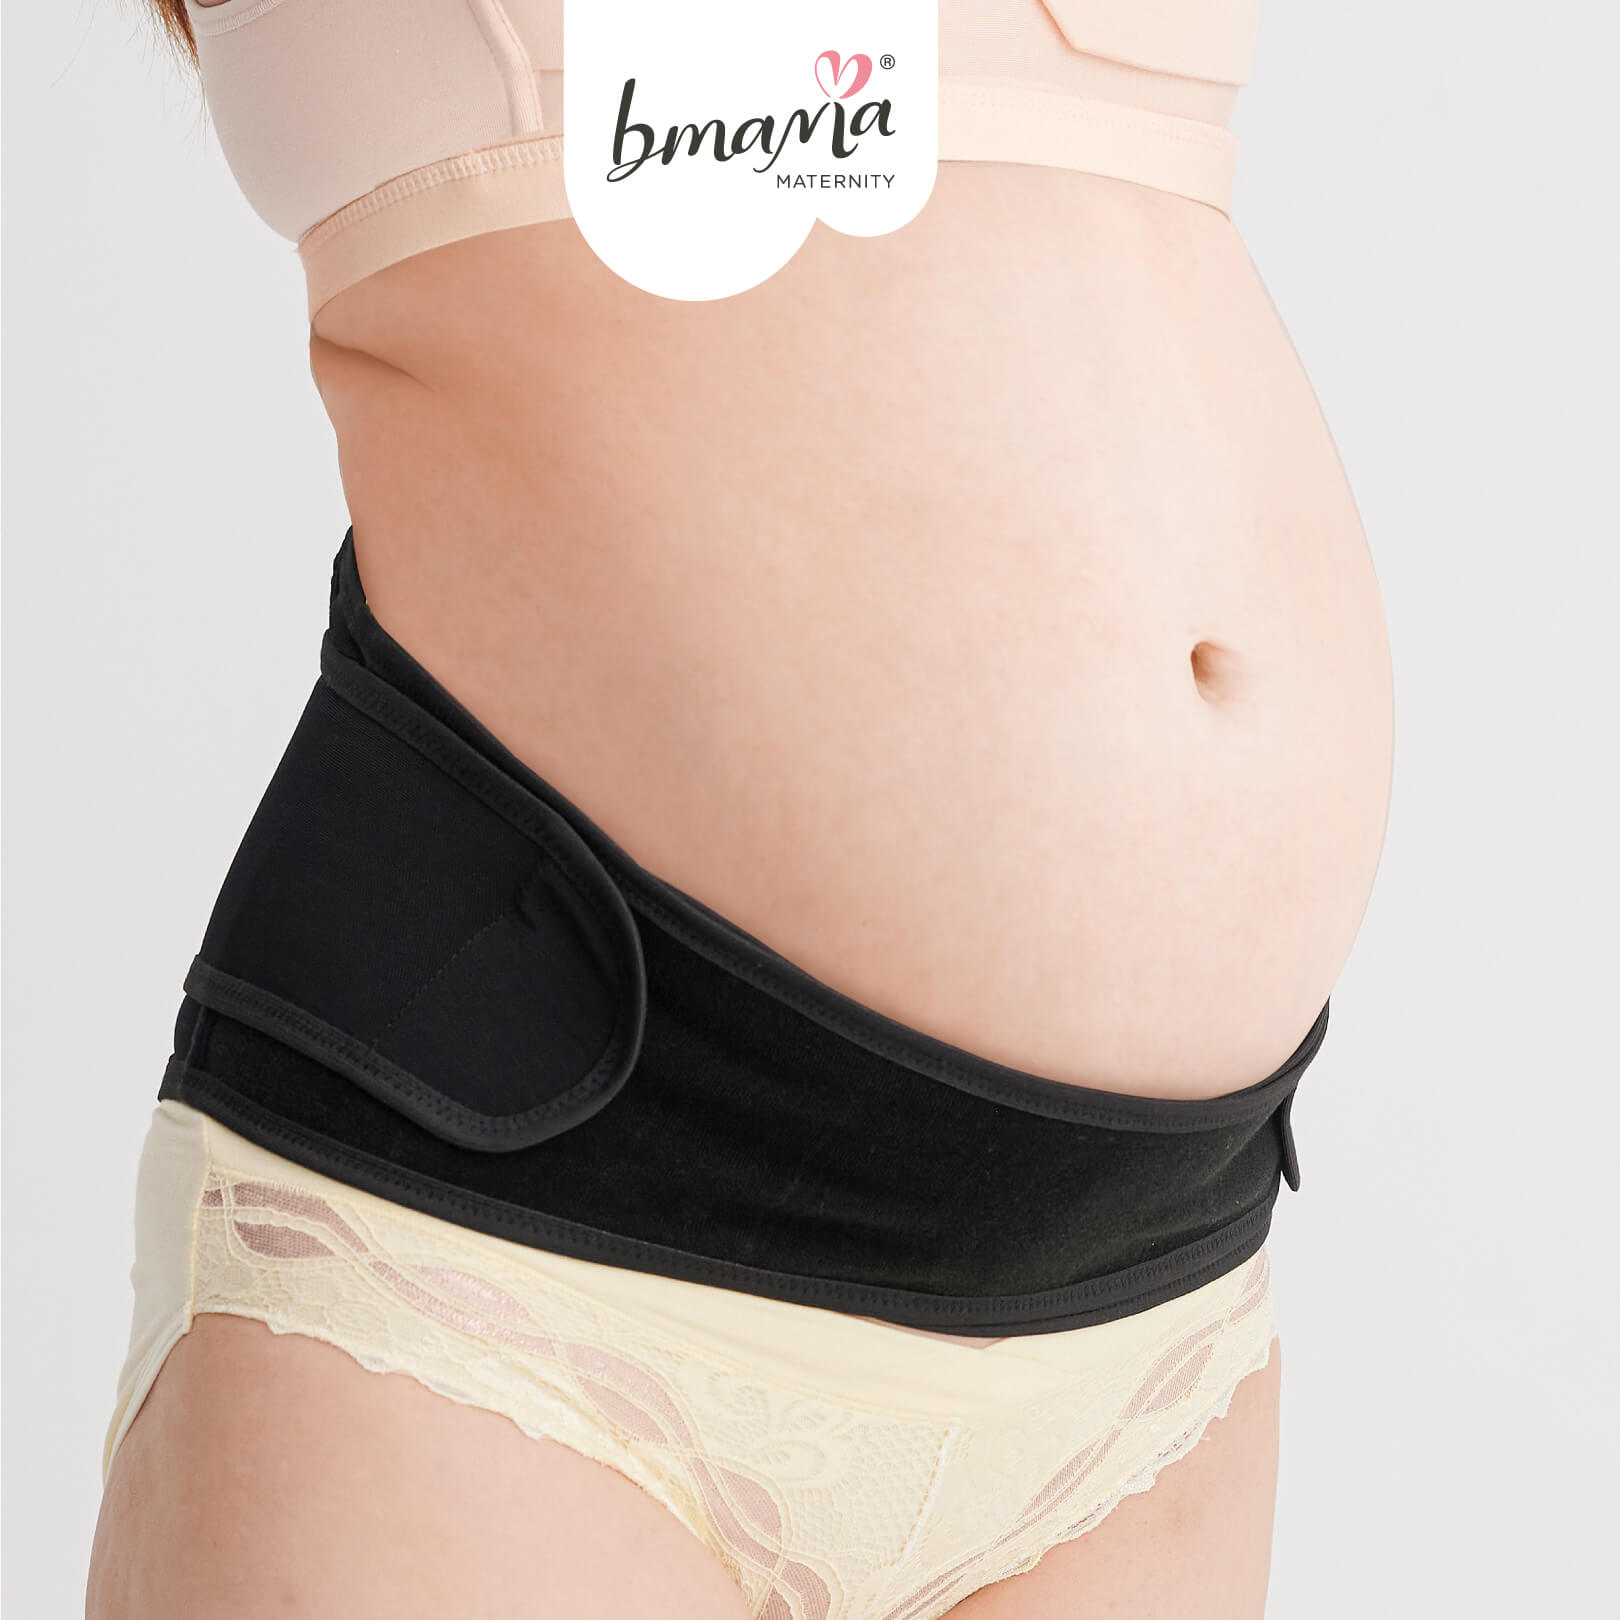 Bmama Premium Maternity Support Belt - Black